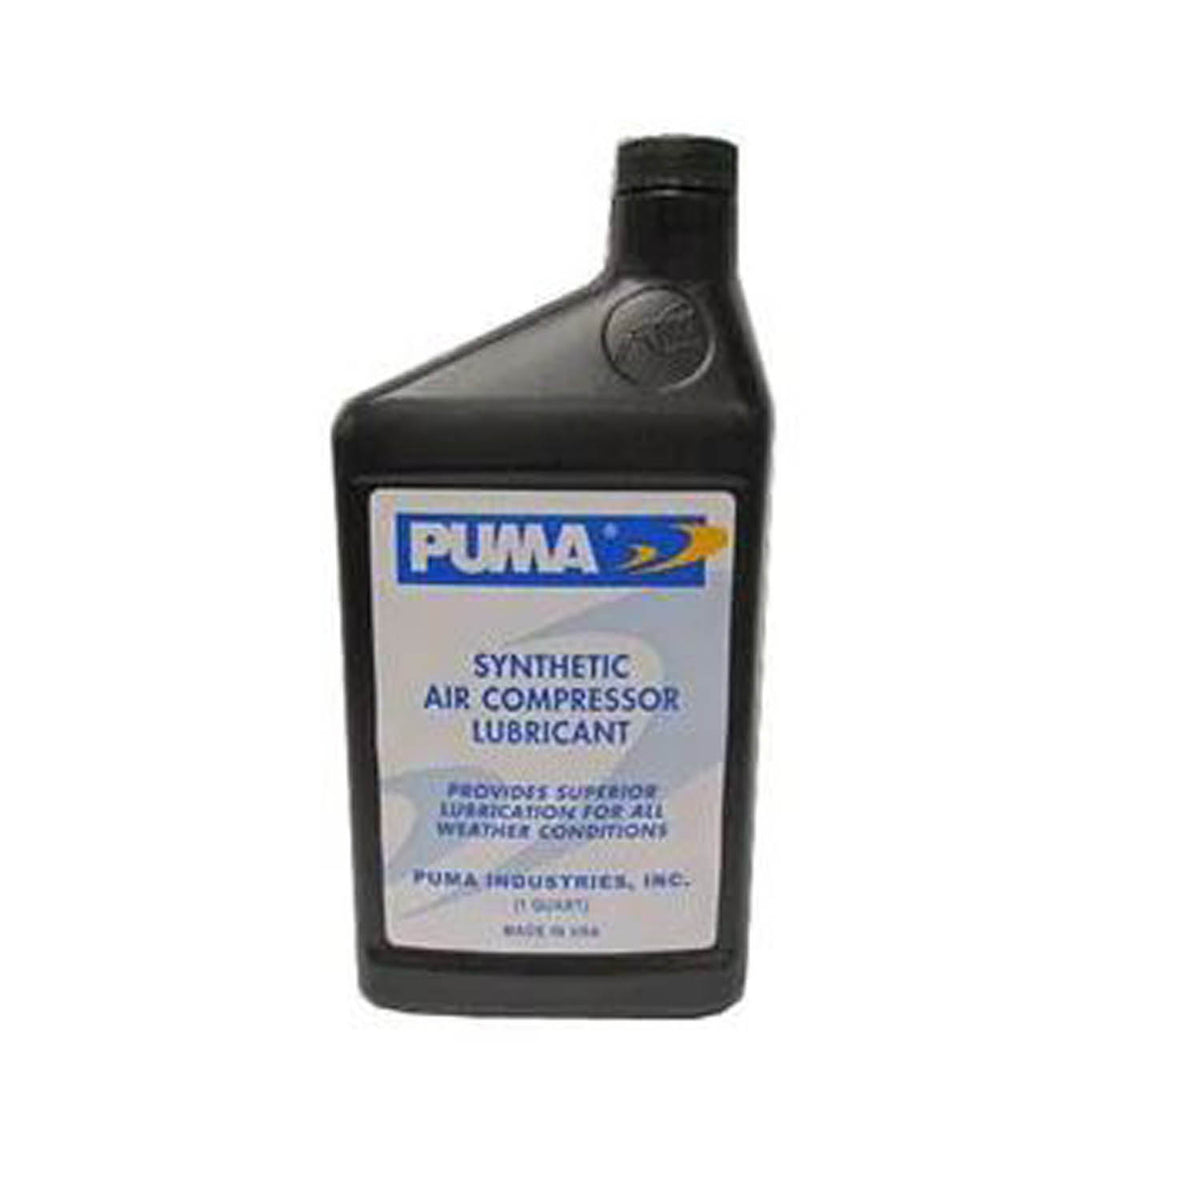 puma air compressor oil type